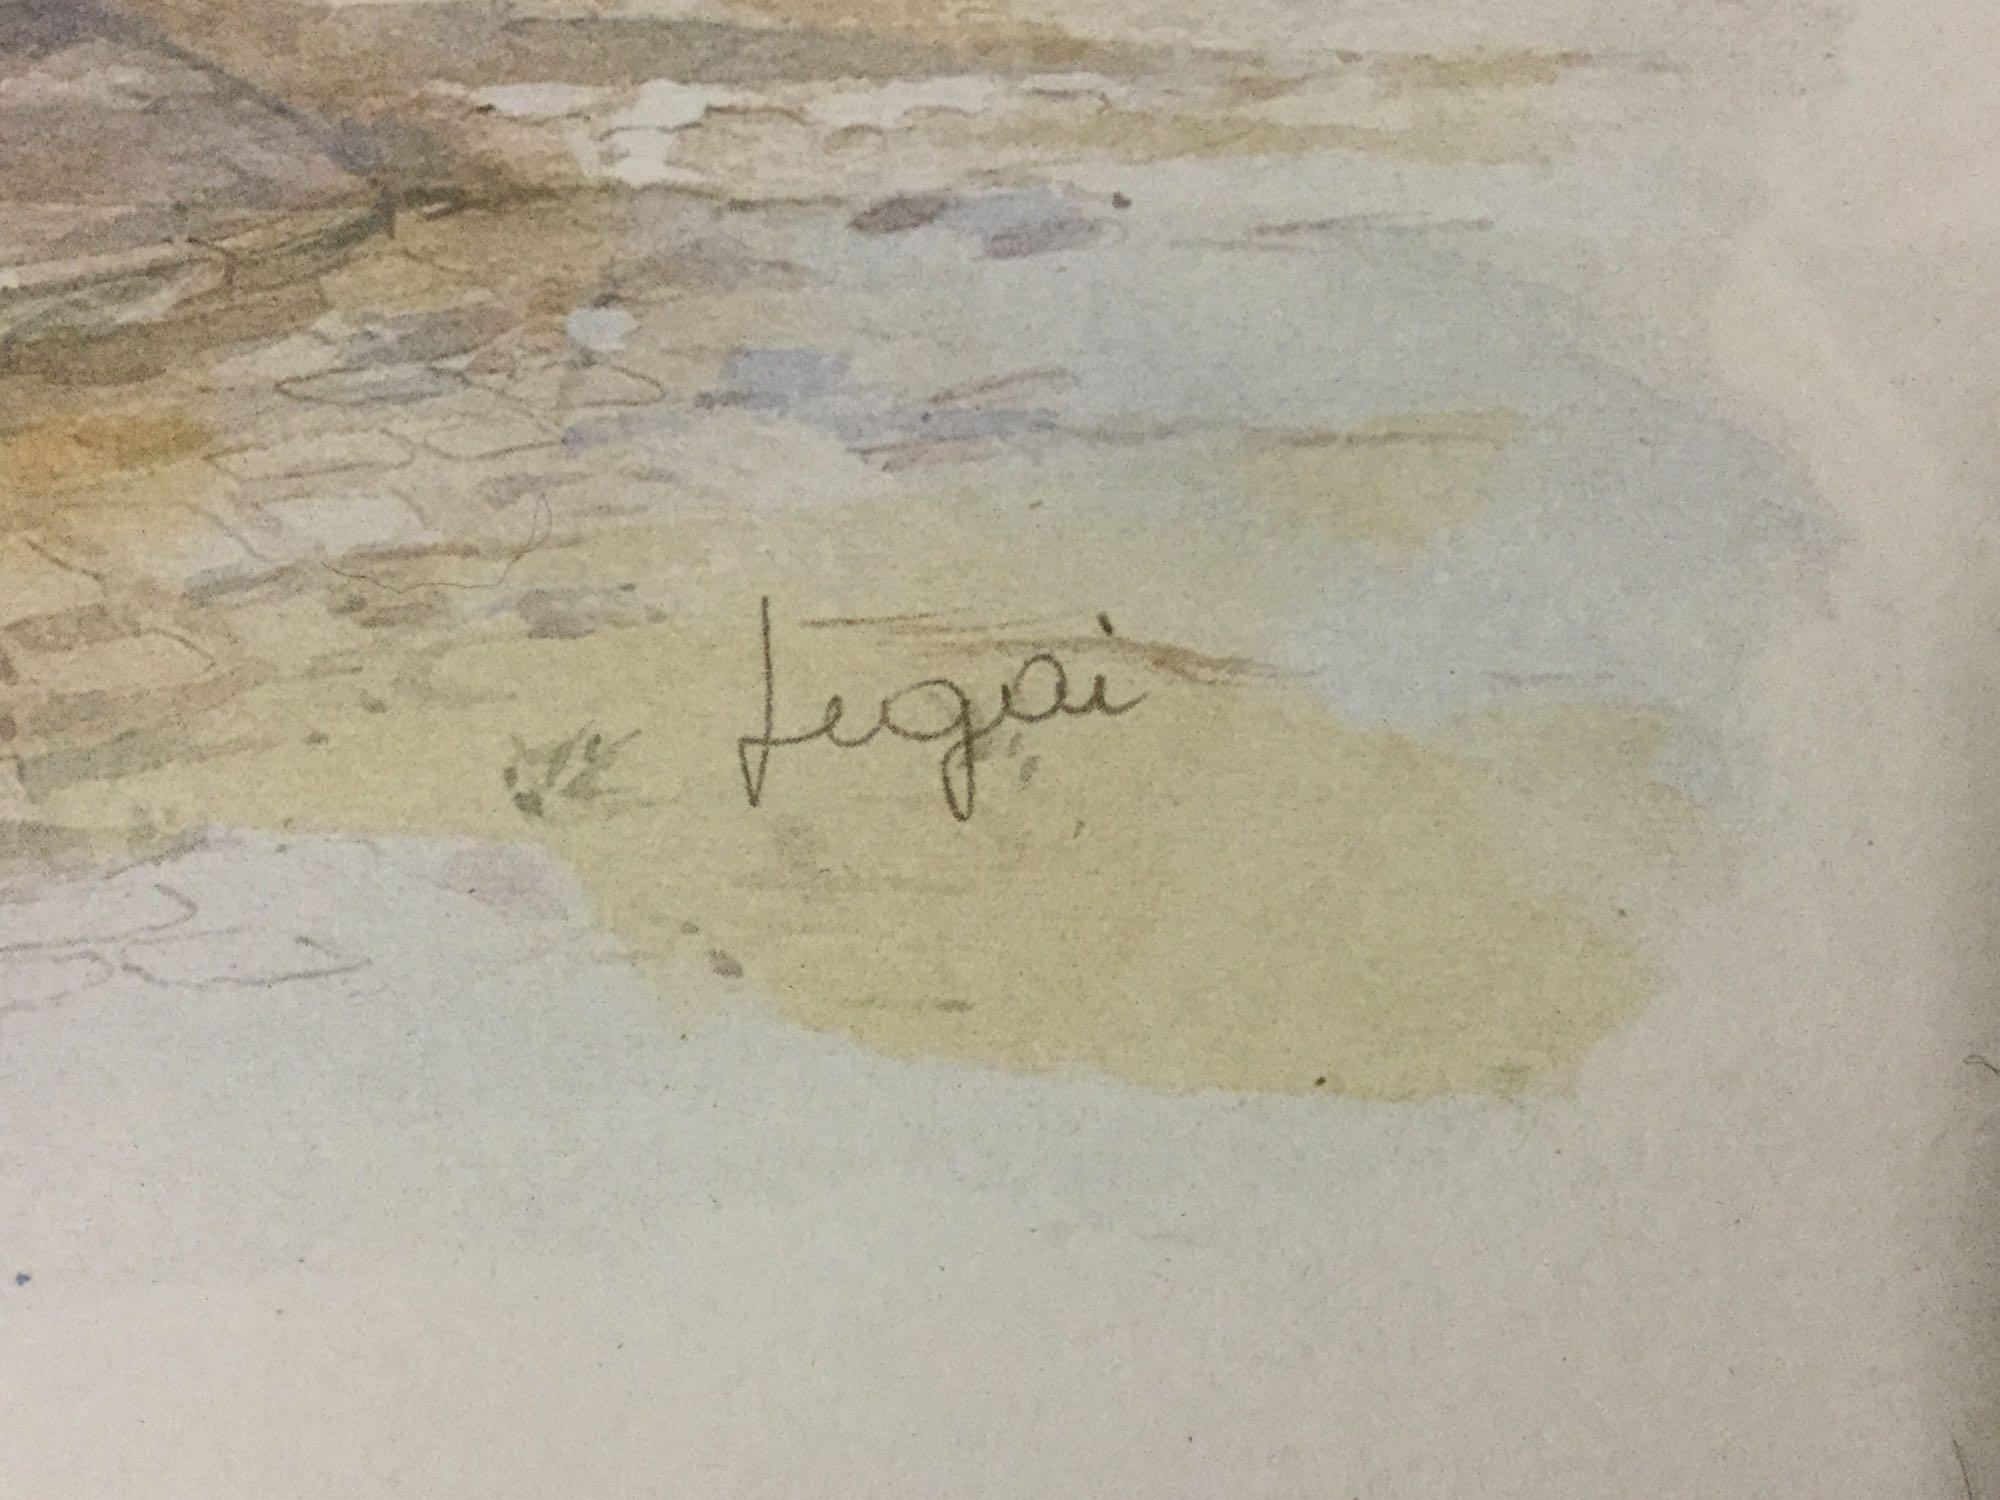 Pair of Watercolor Paintings, signed Tousset and Legai - European scenes